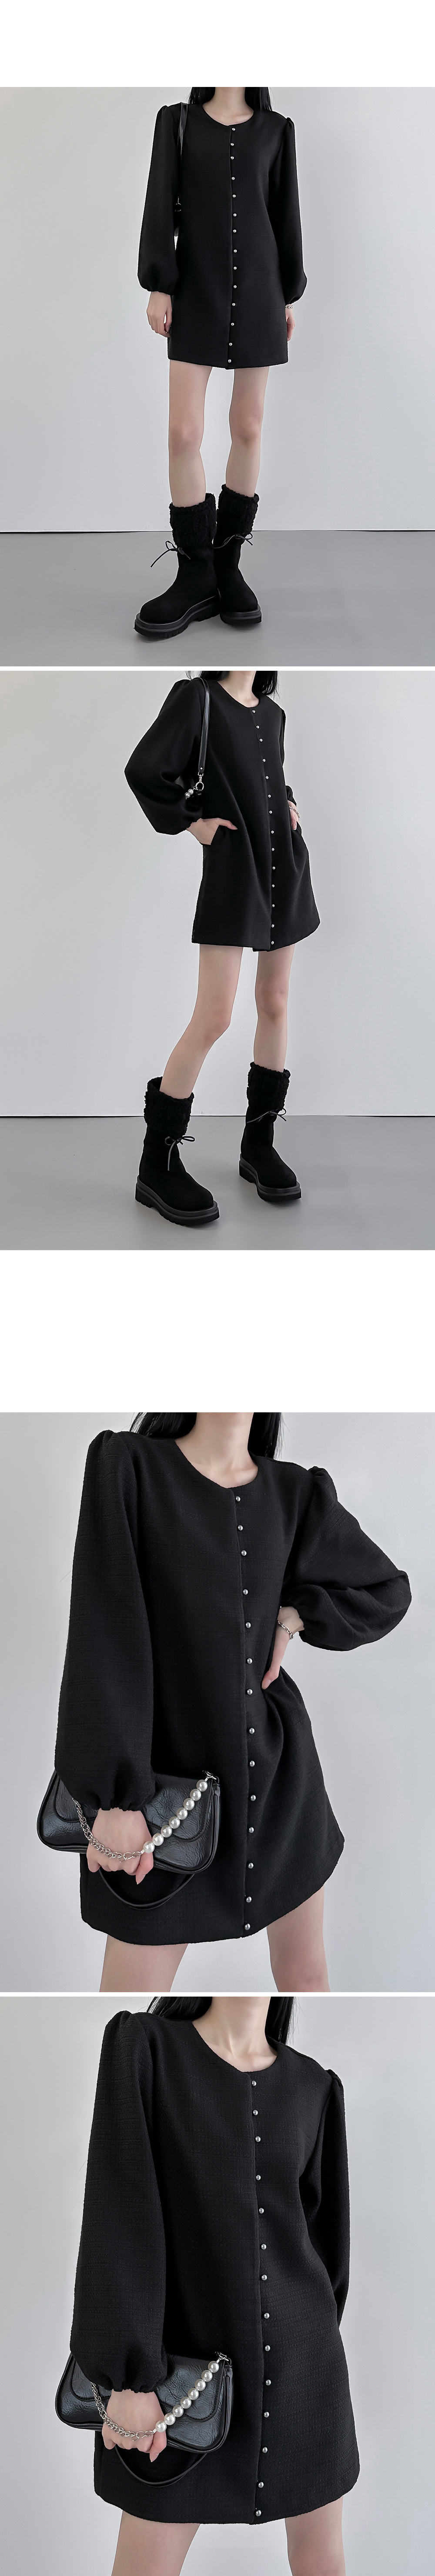 suspenders skirt/pants model image-S3L1